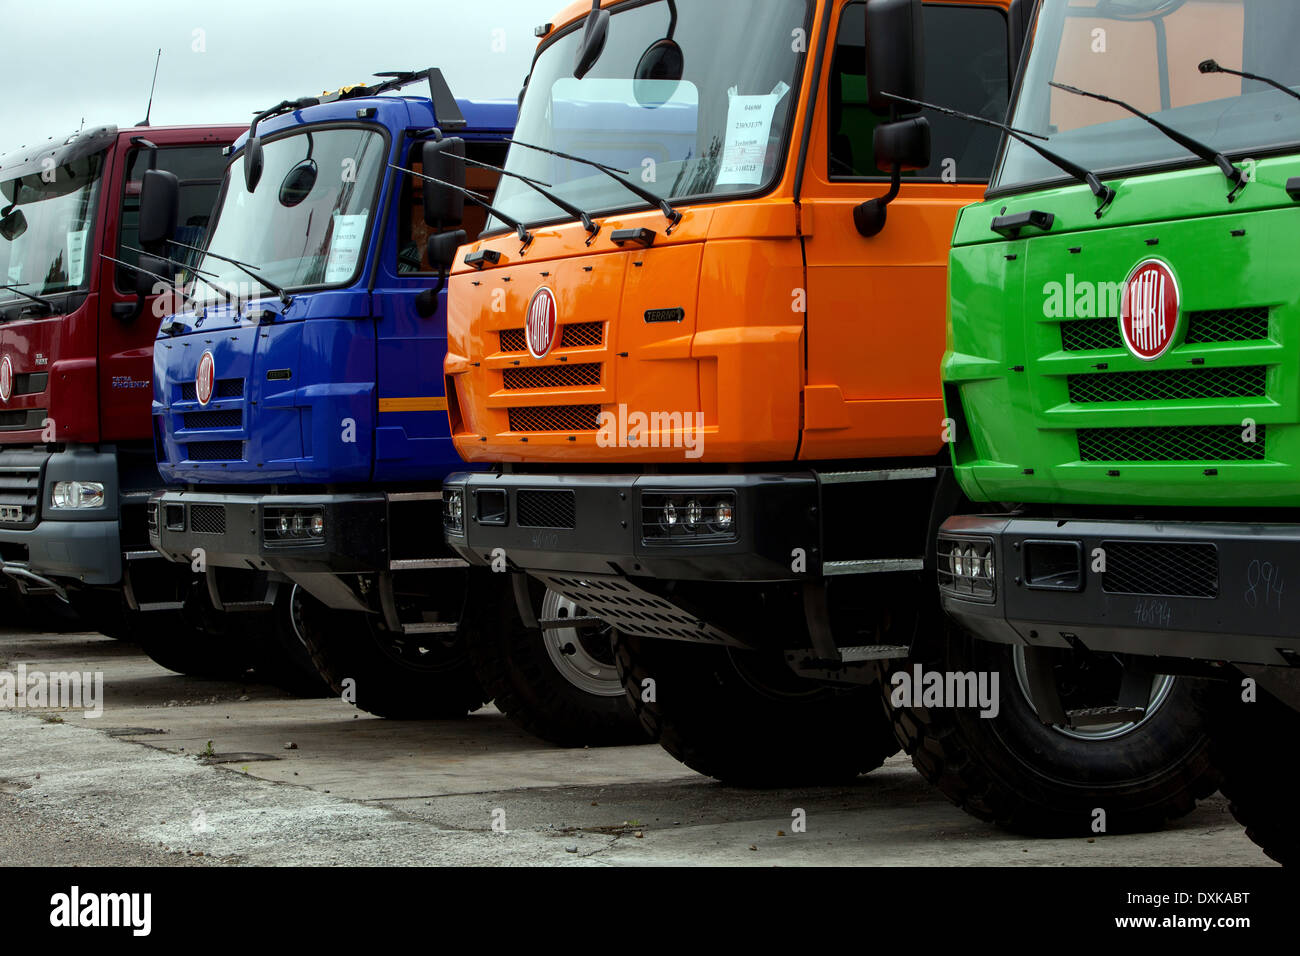 Tatra trucks, Koprivnice Czech Republic automotive industry, made parked trucks Stock Photo